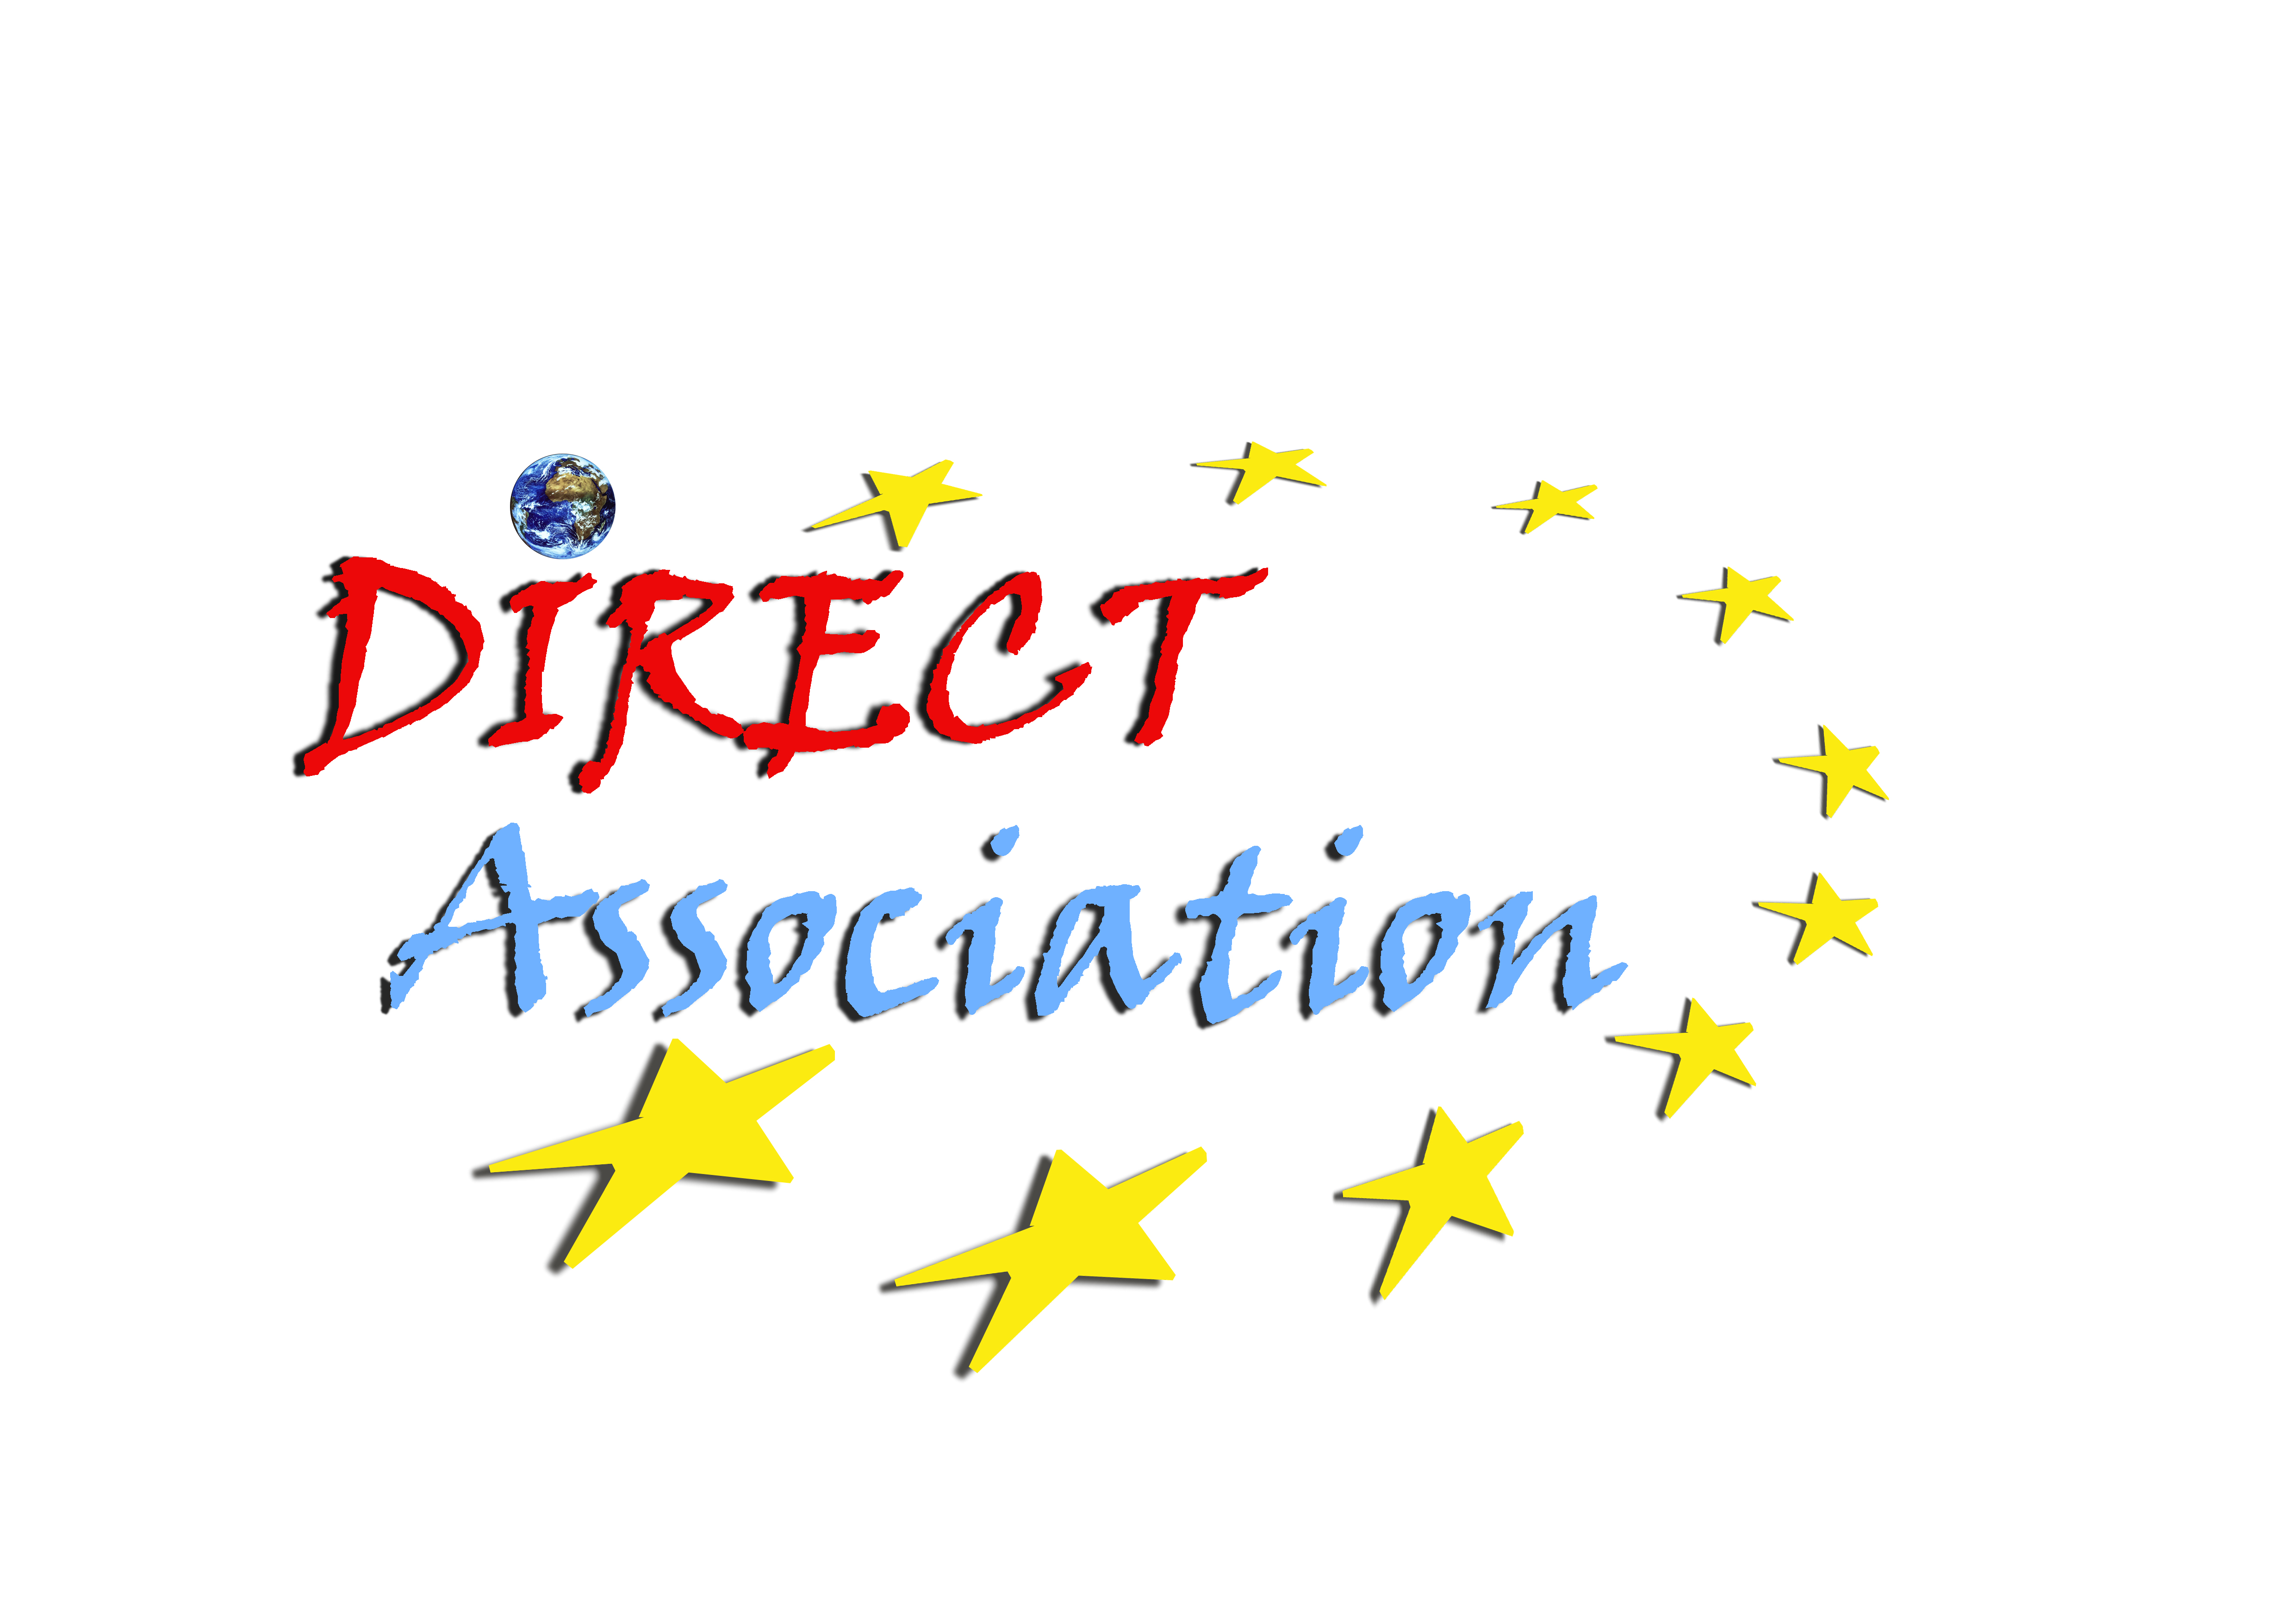 DIRECT Association